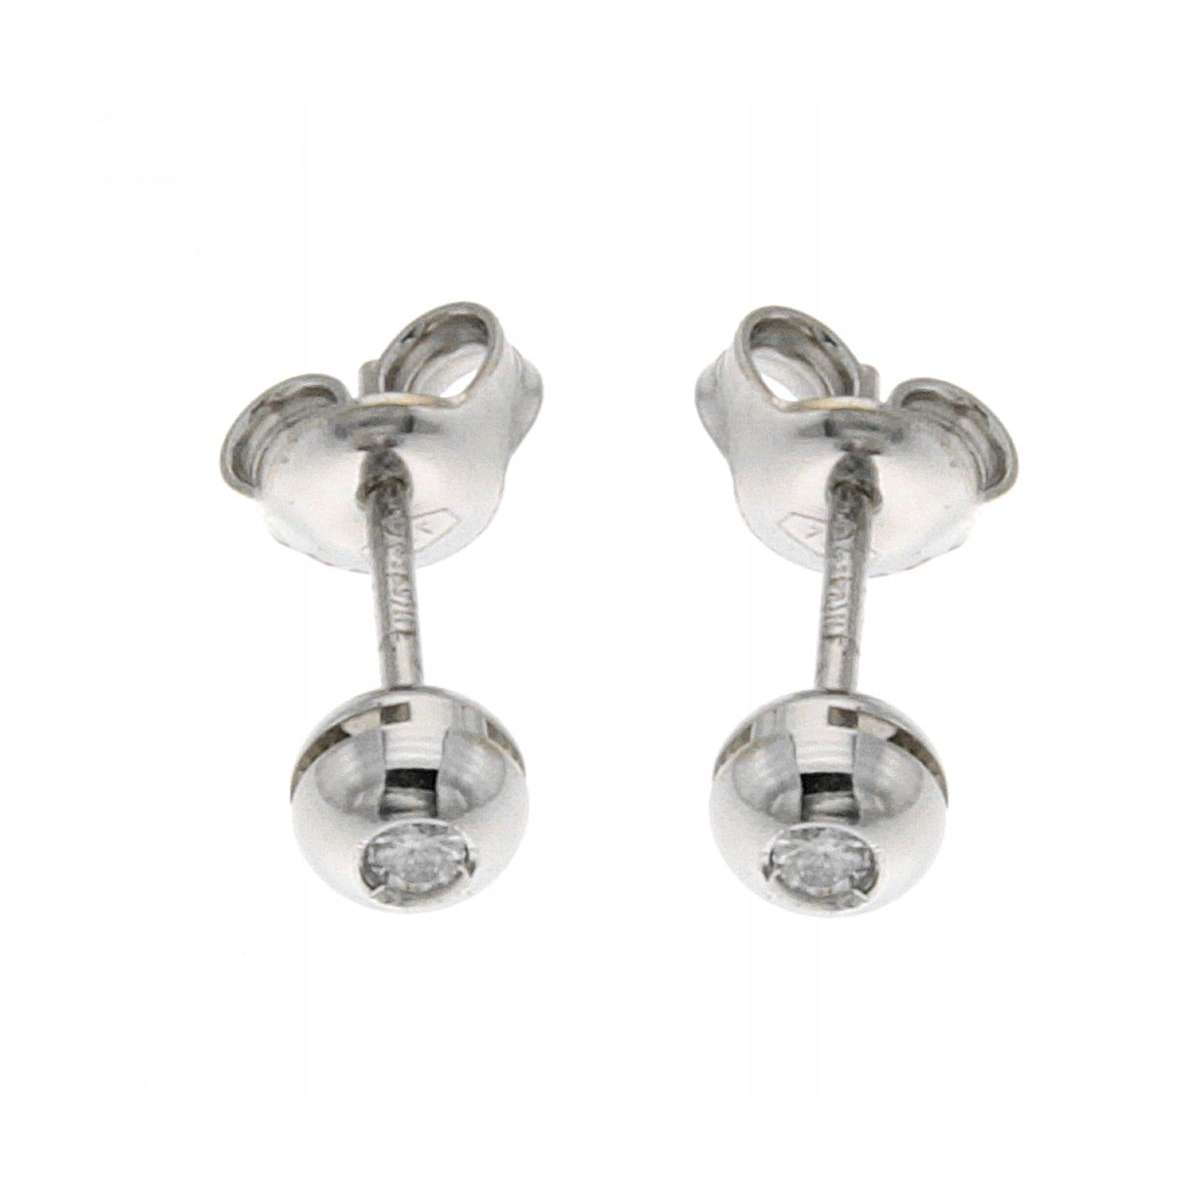 Solitaire cipollina earrings 0.13 carats diamonds G-VVS1